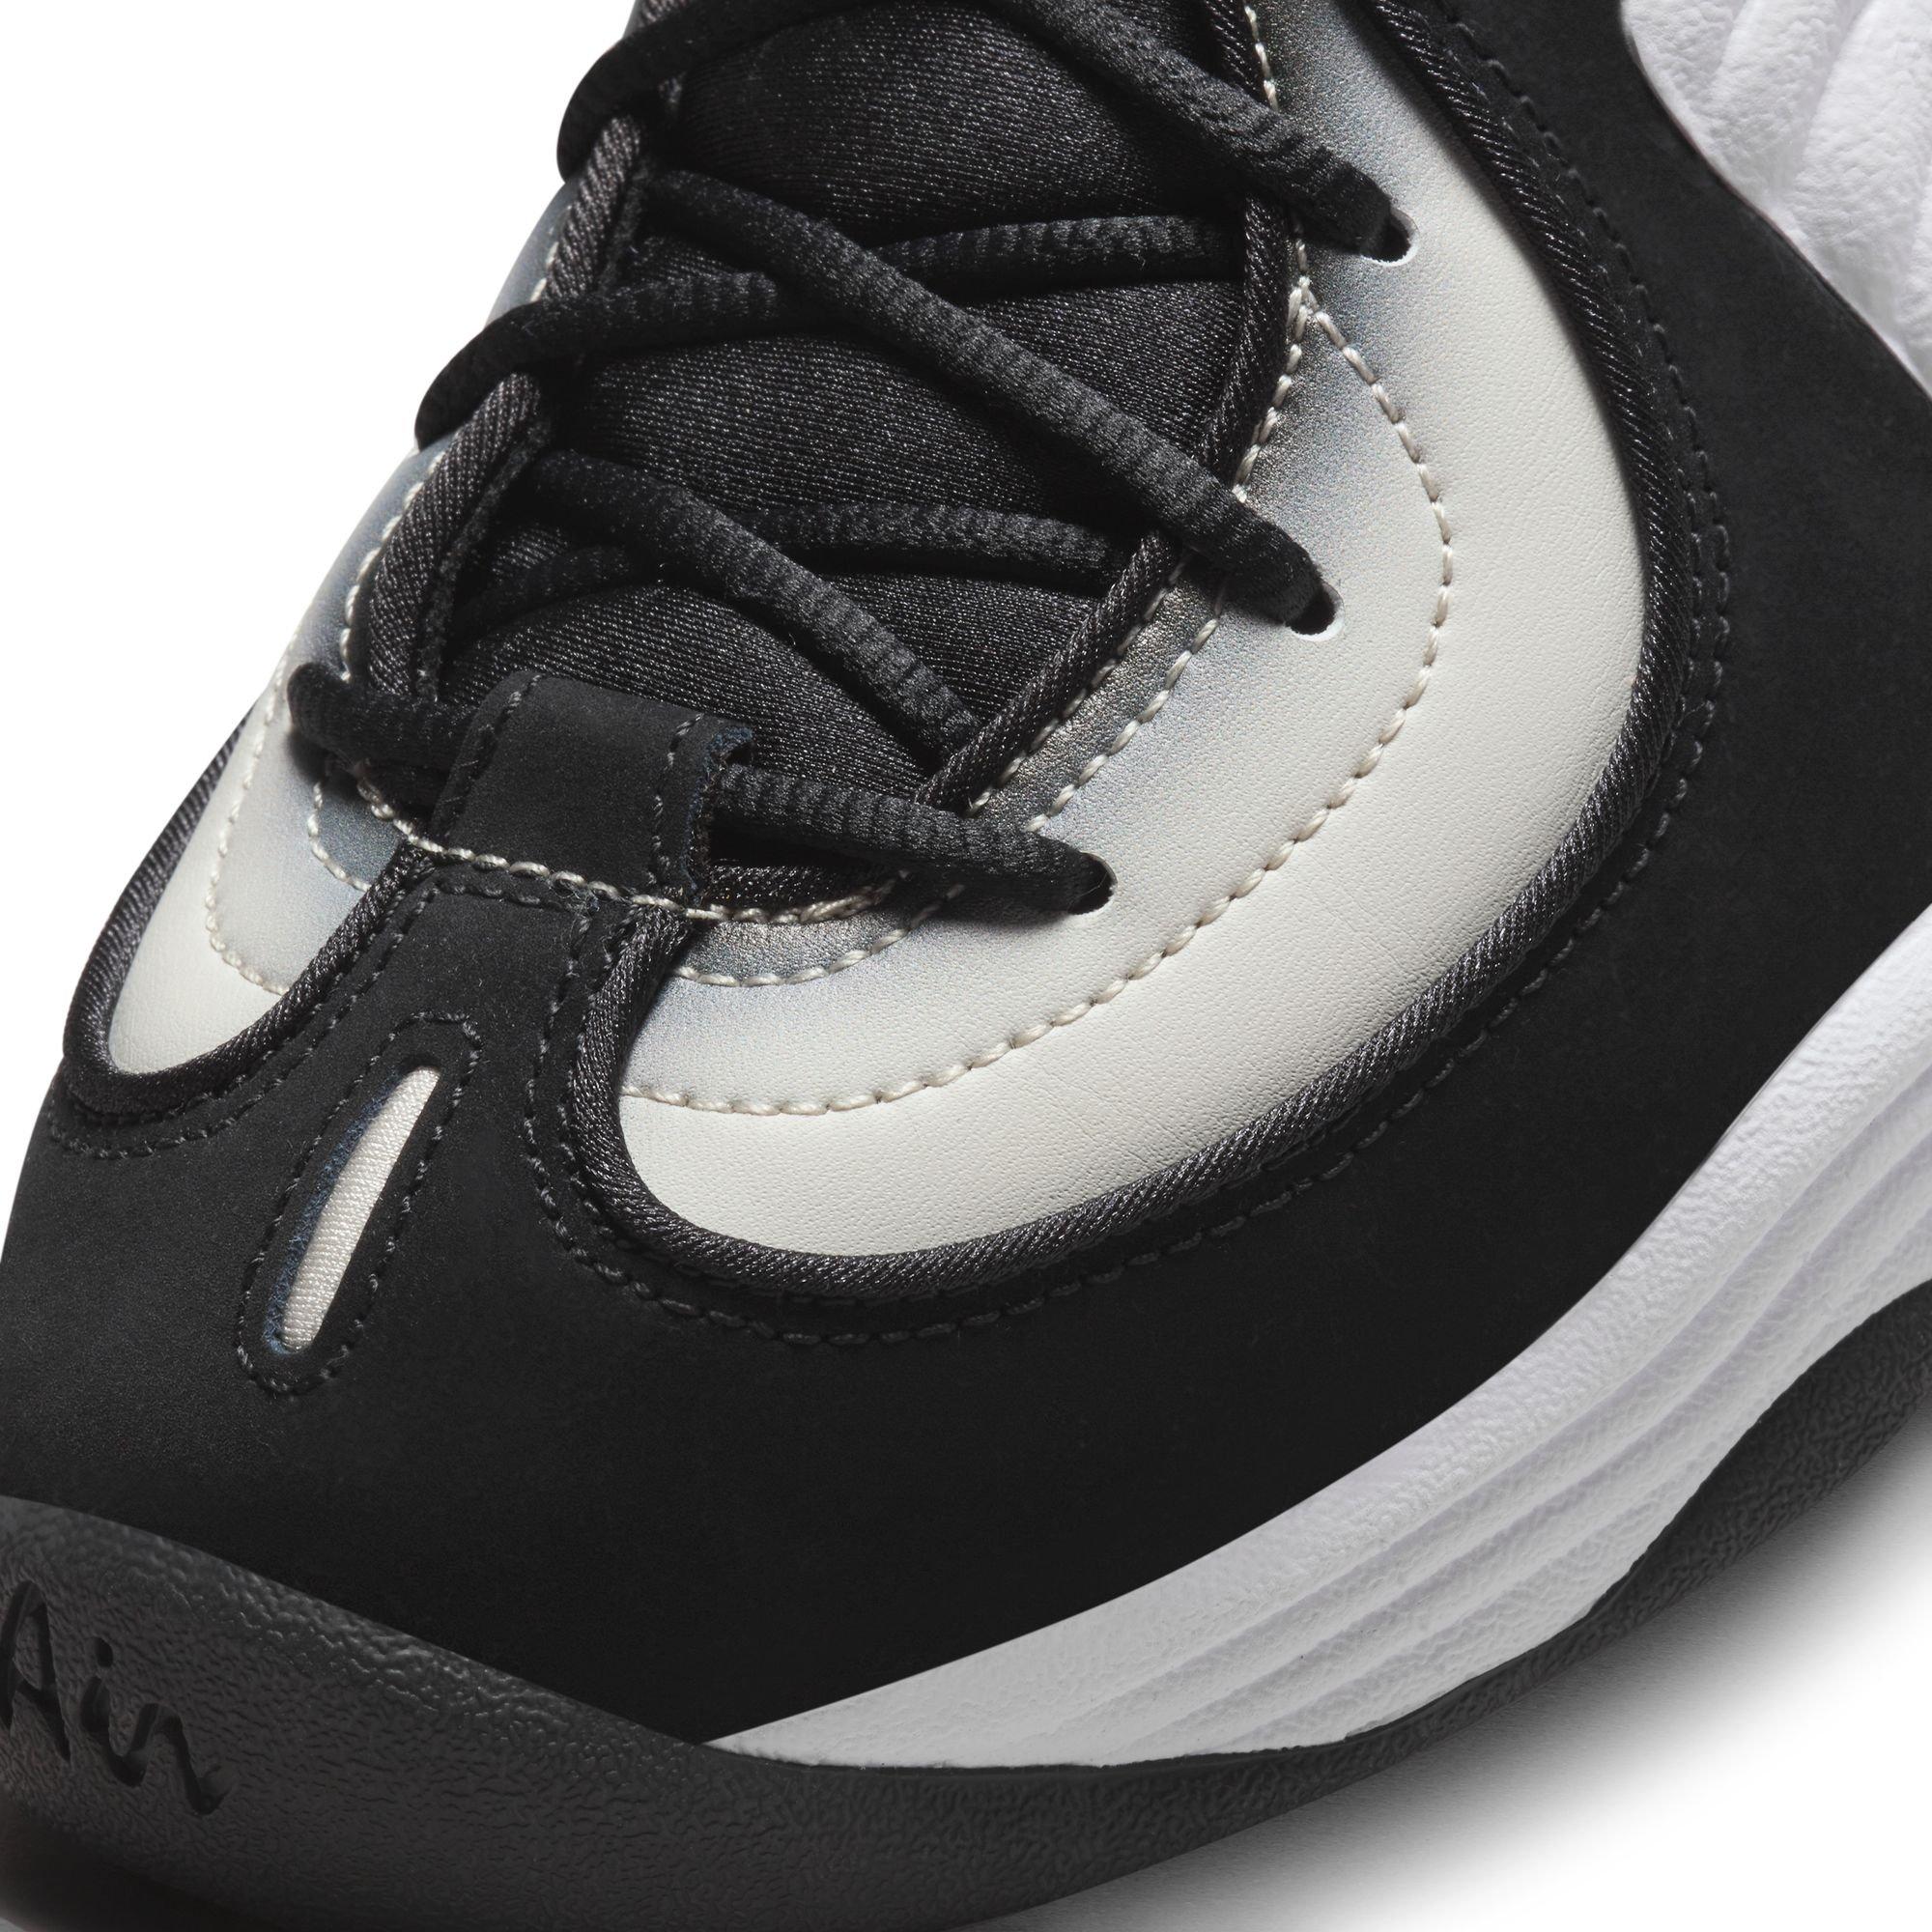 Nike Air Penny 2 Men's Shoes.